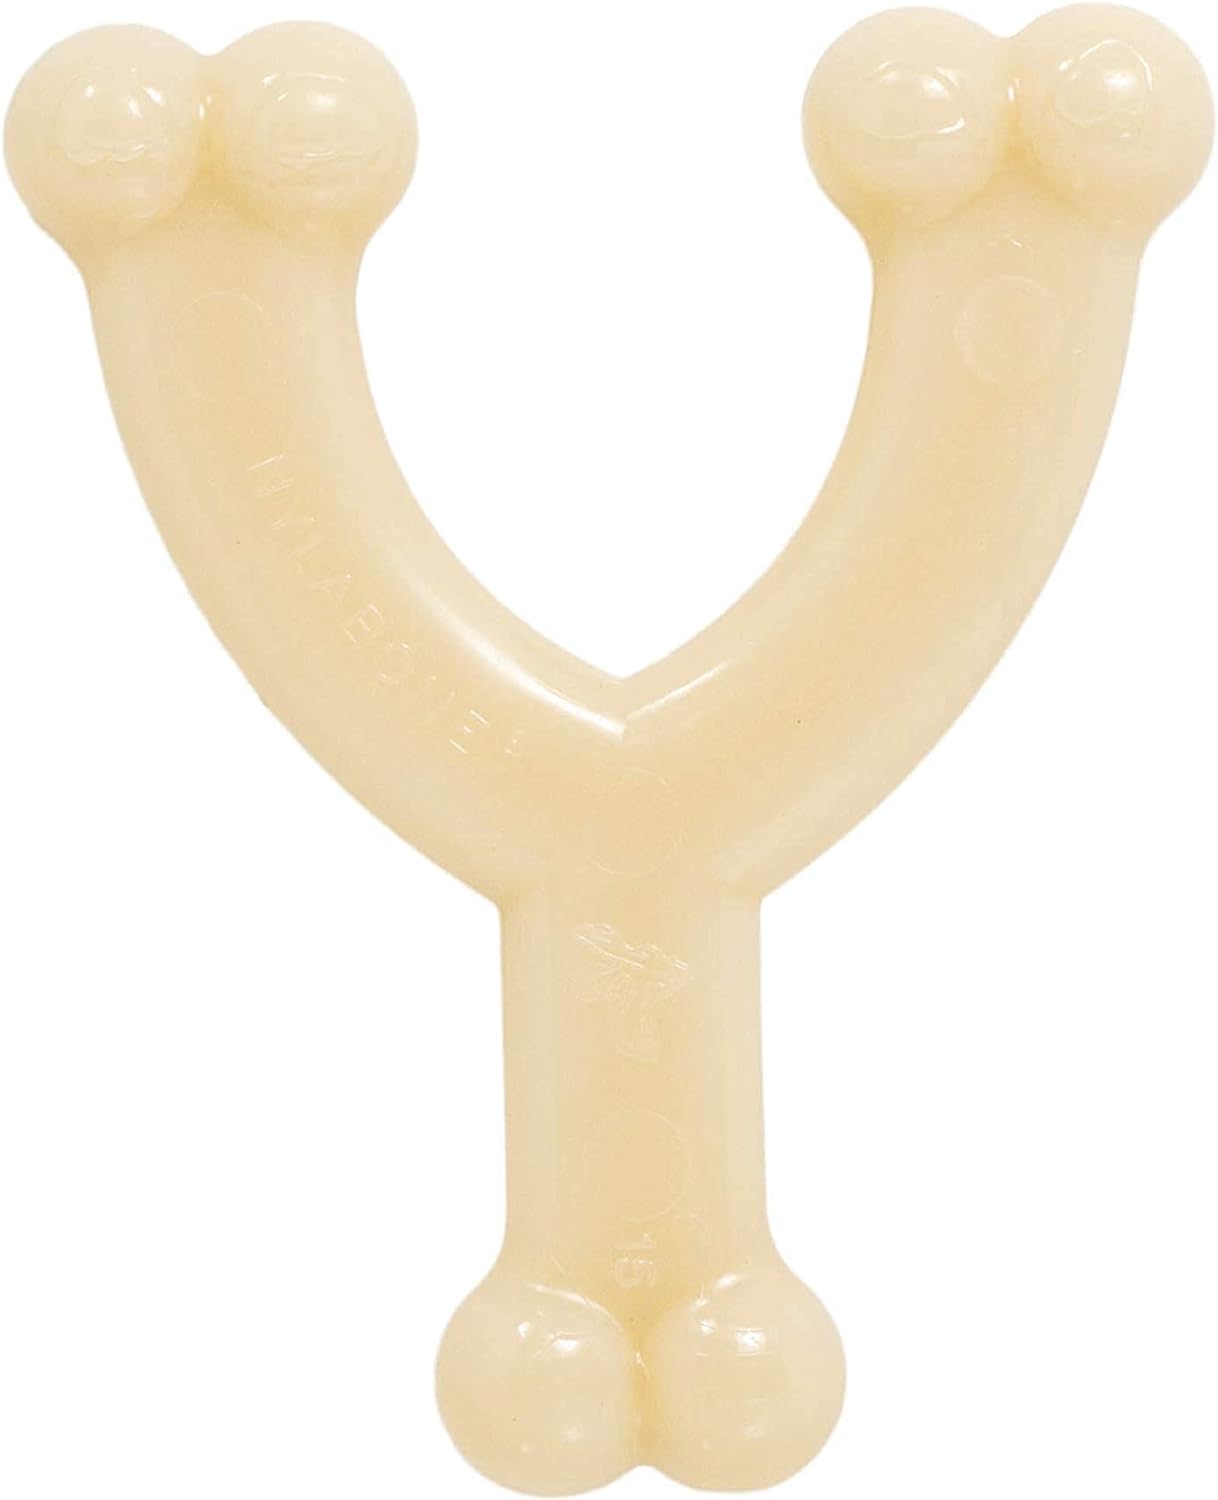 Nylabone Power Chew Original Flavored Wishbone Dog Chew Toy (Small) $2.40 w/ S&S + Free S&H w/ Prime or $35+